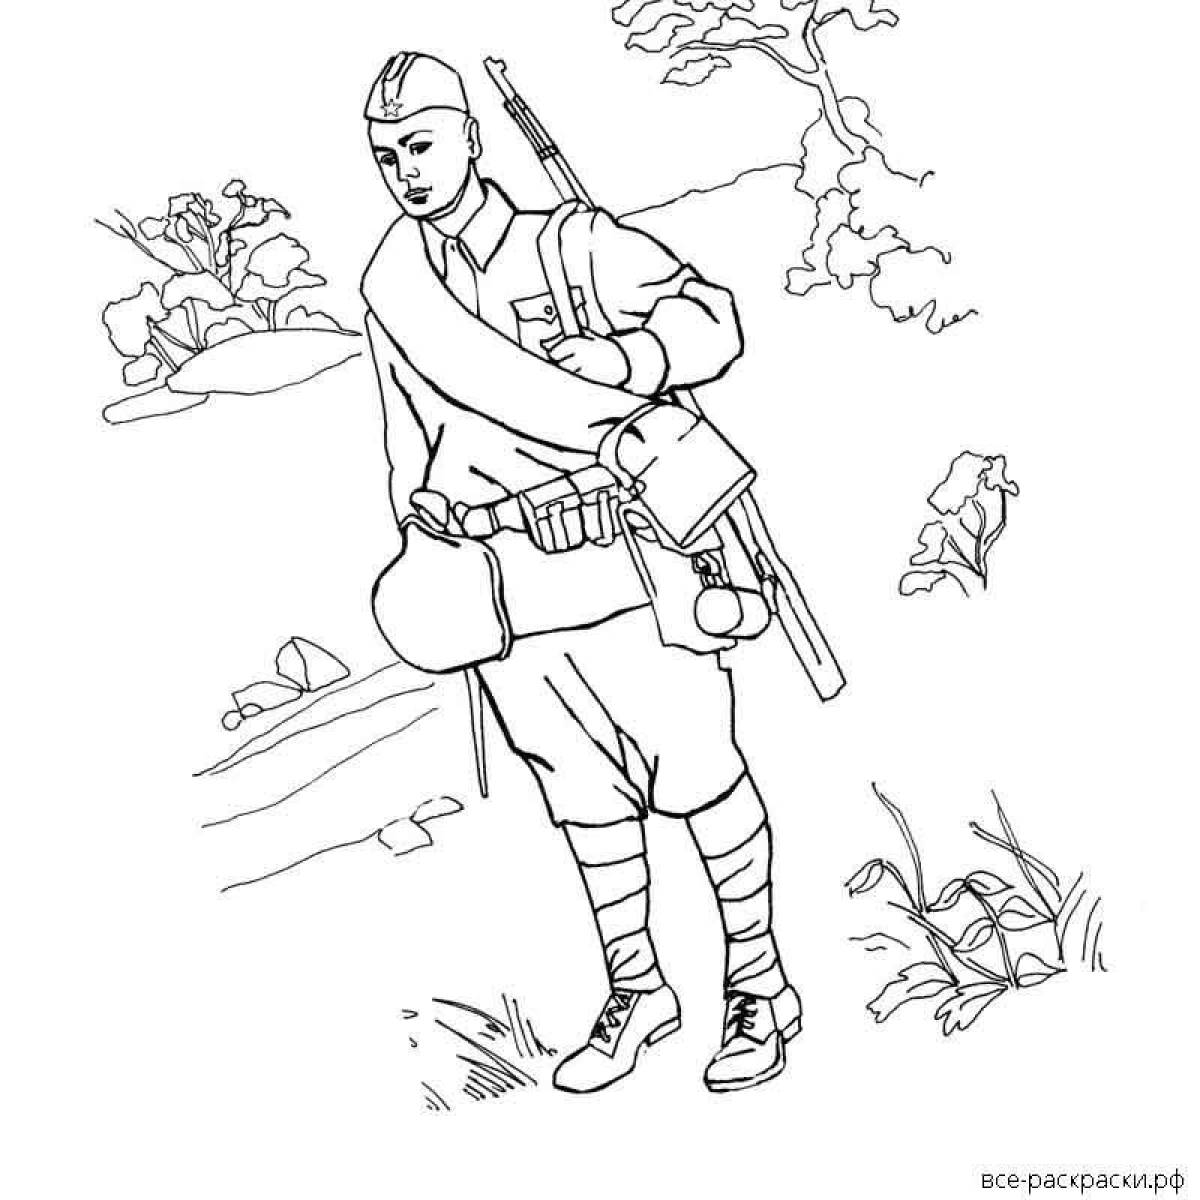 Decisive soldier coloring book